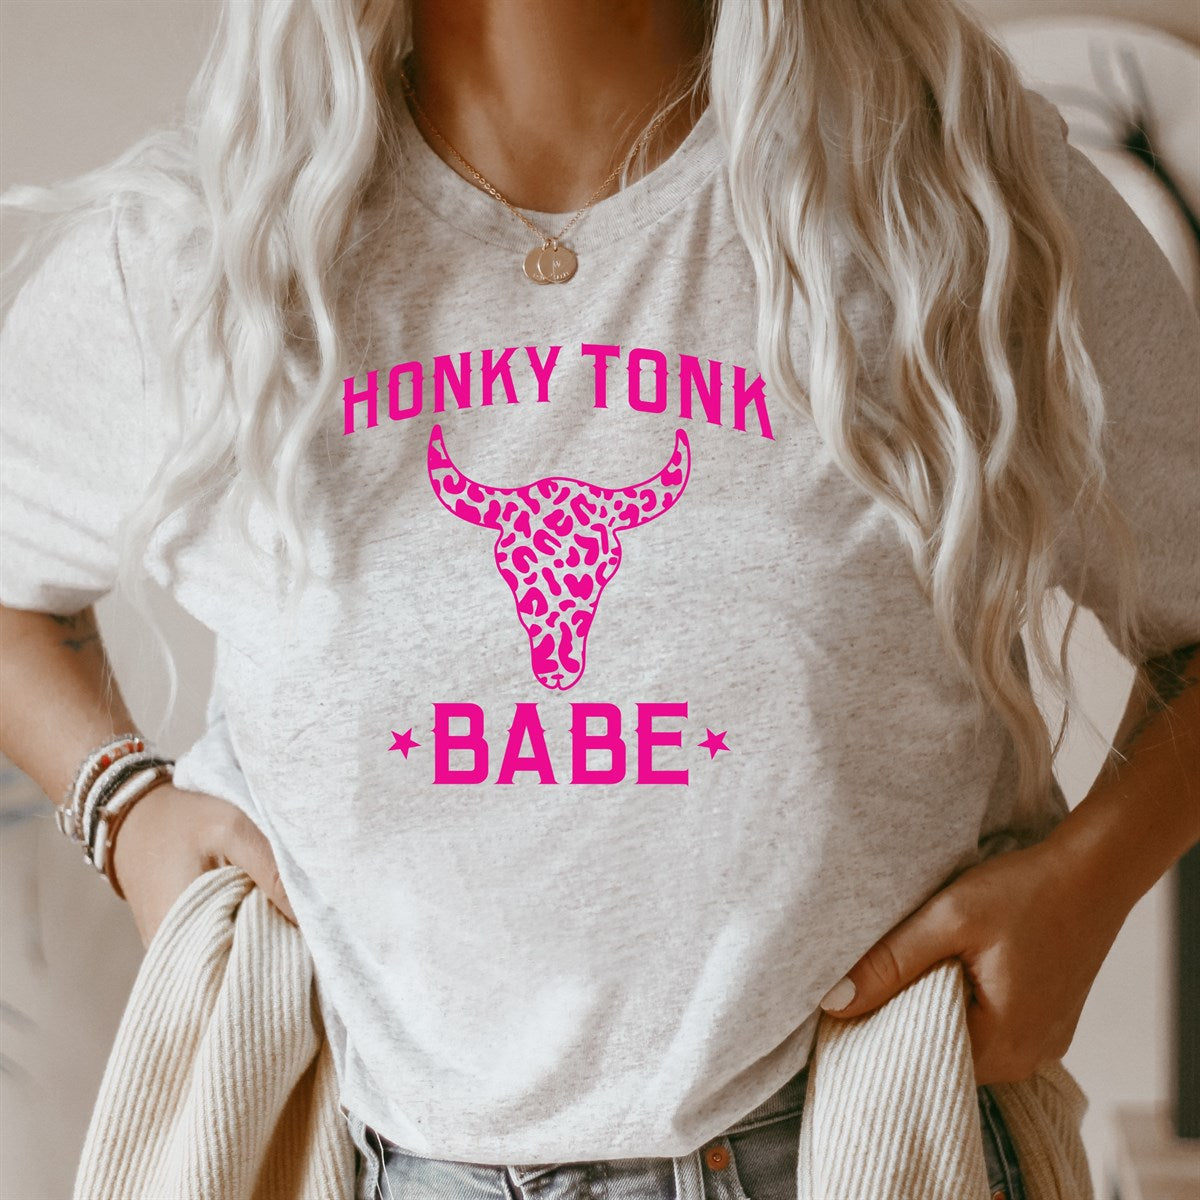 Honky Tonk Babe With Leopard Print Skull Tee